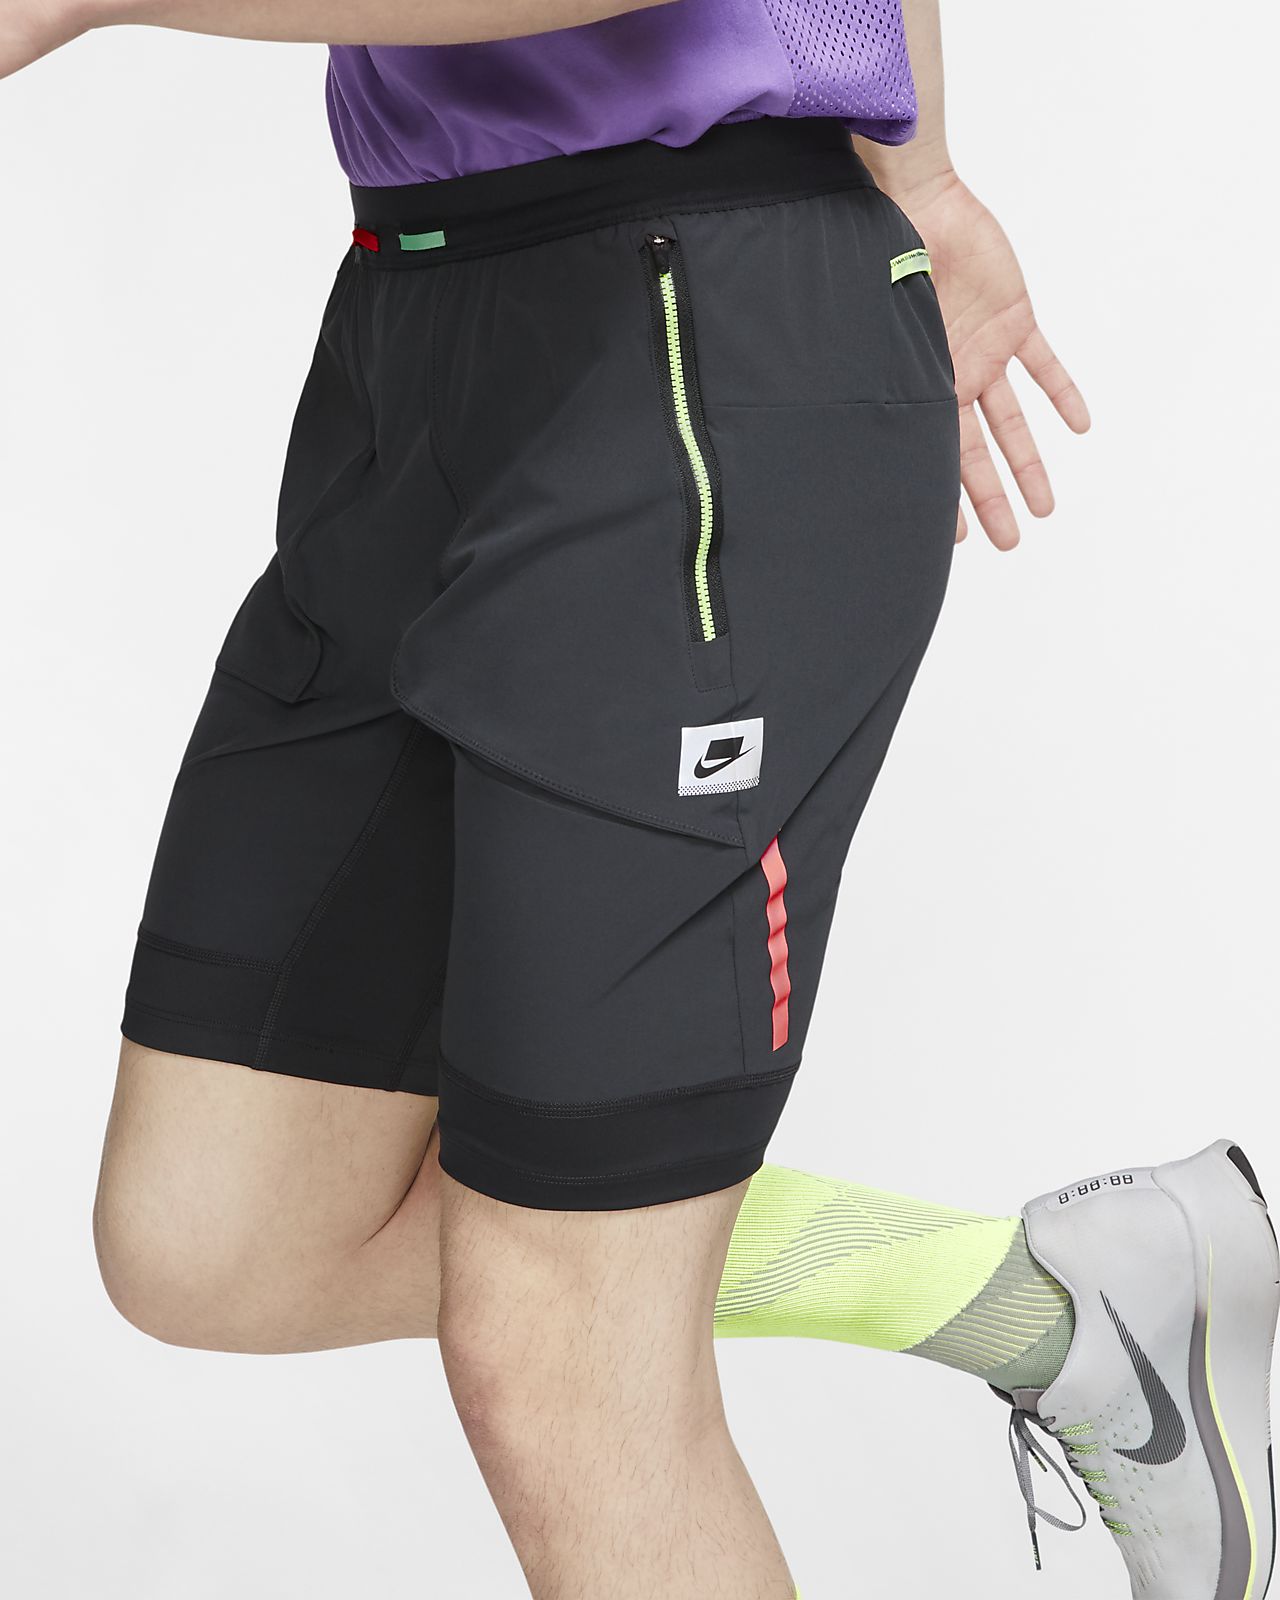 Nike Men S Compression Shorts Size Chart